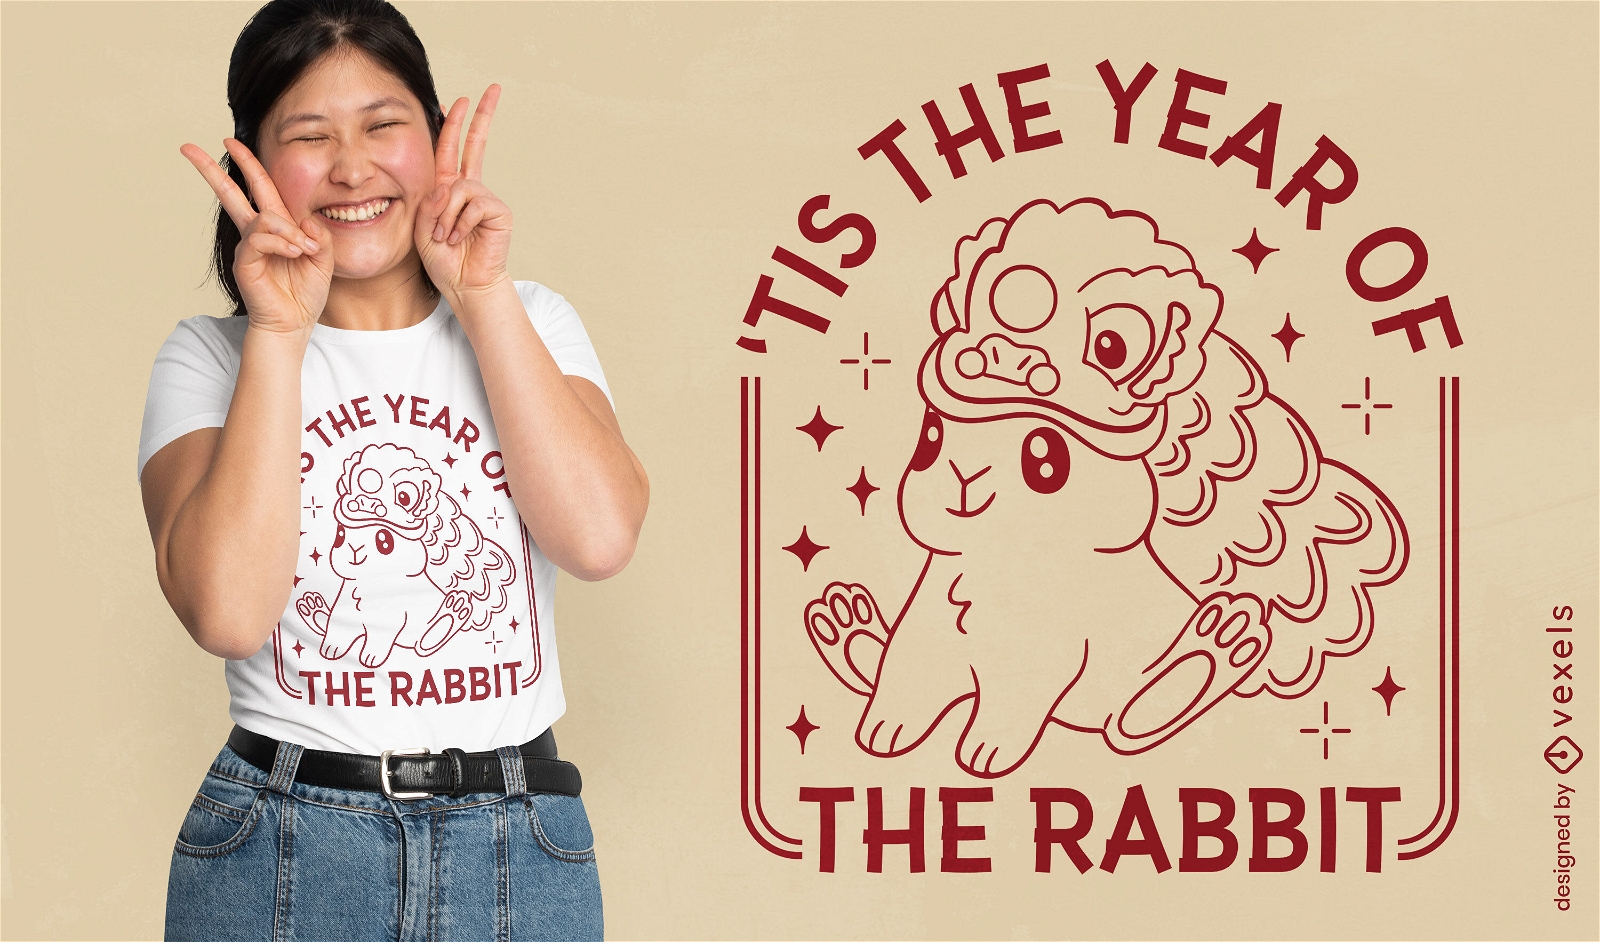 Dise?o de camiseta a?o nuevo chino a?o del conejo